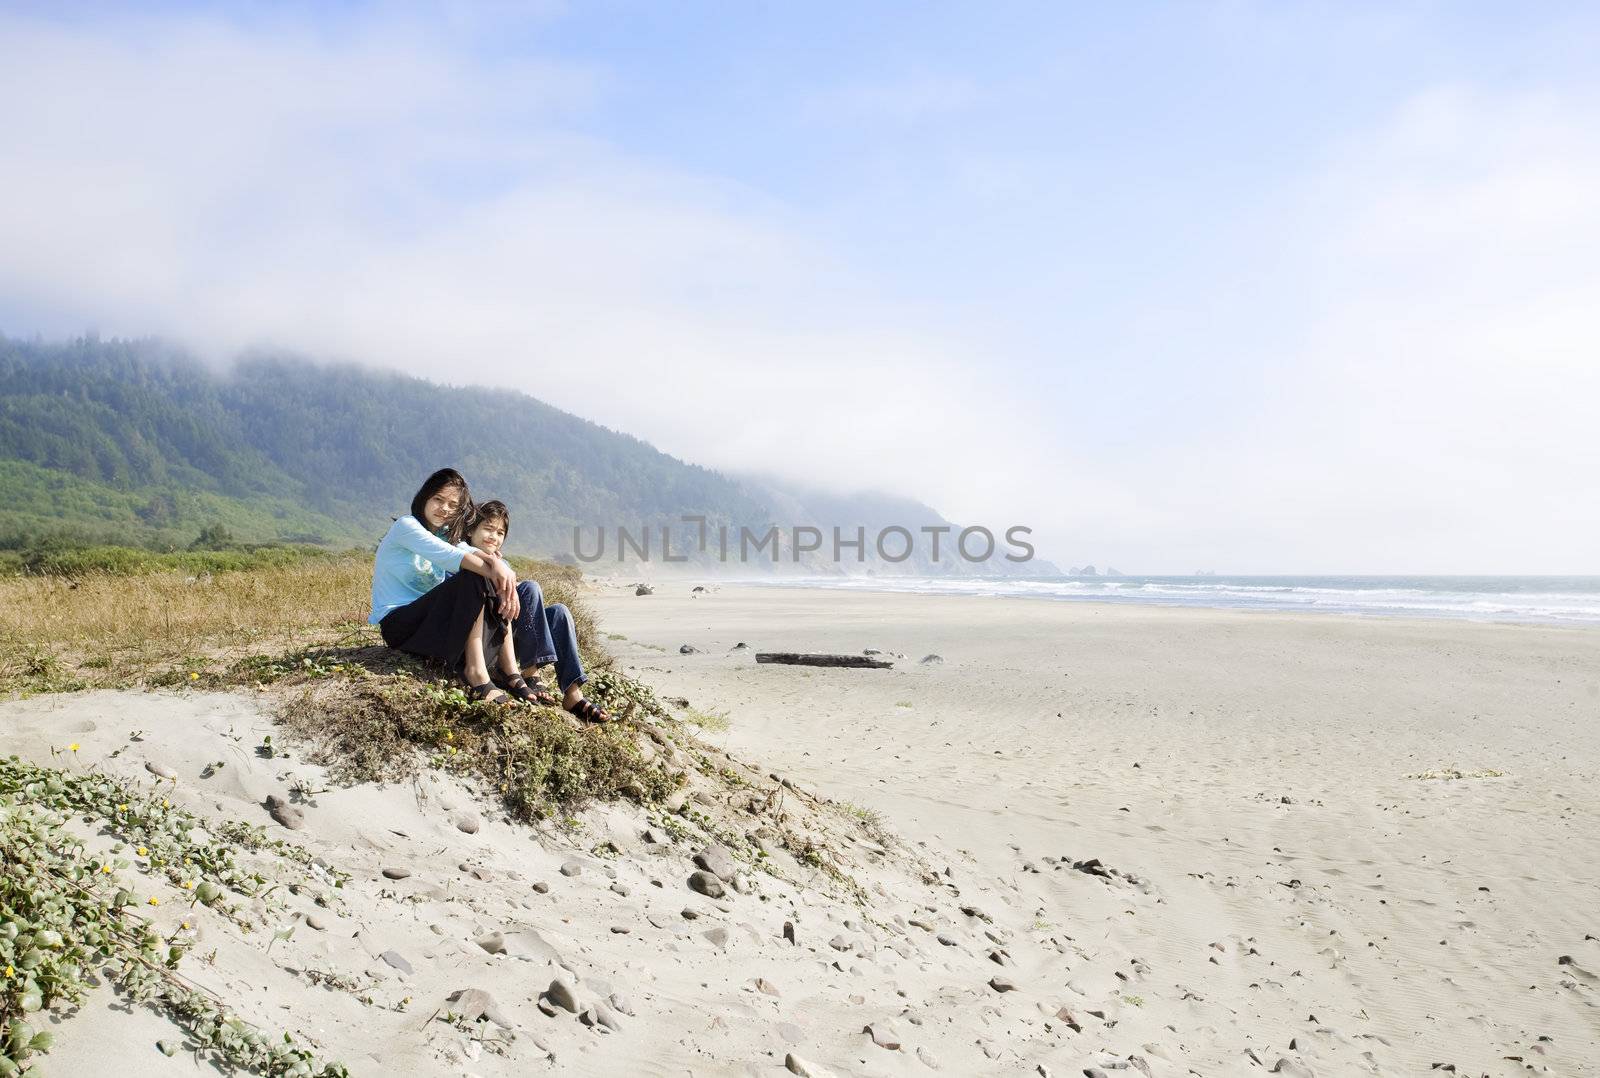 Two young girls enjoying the beach by the ocean shore